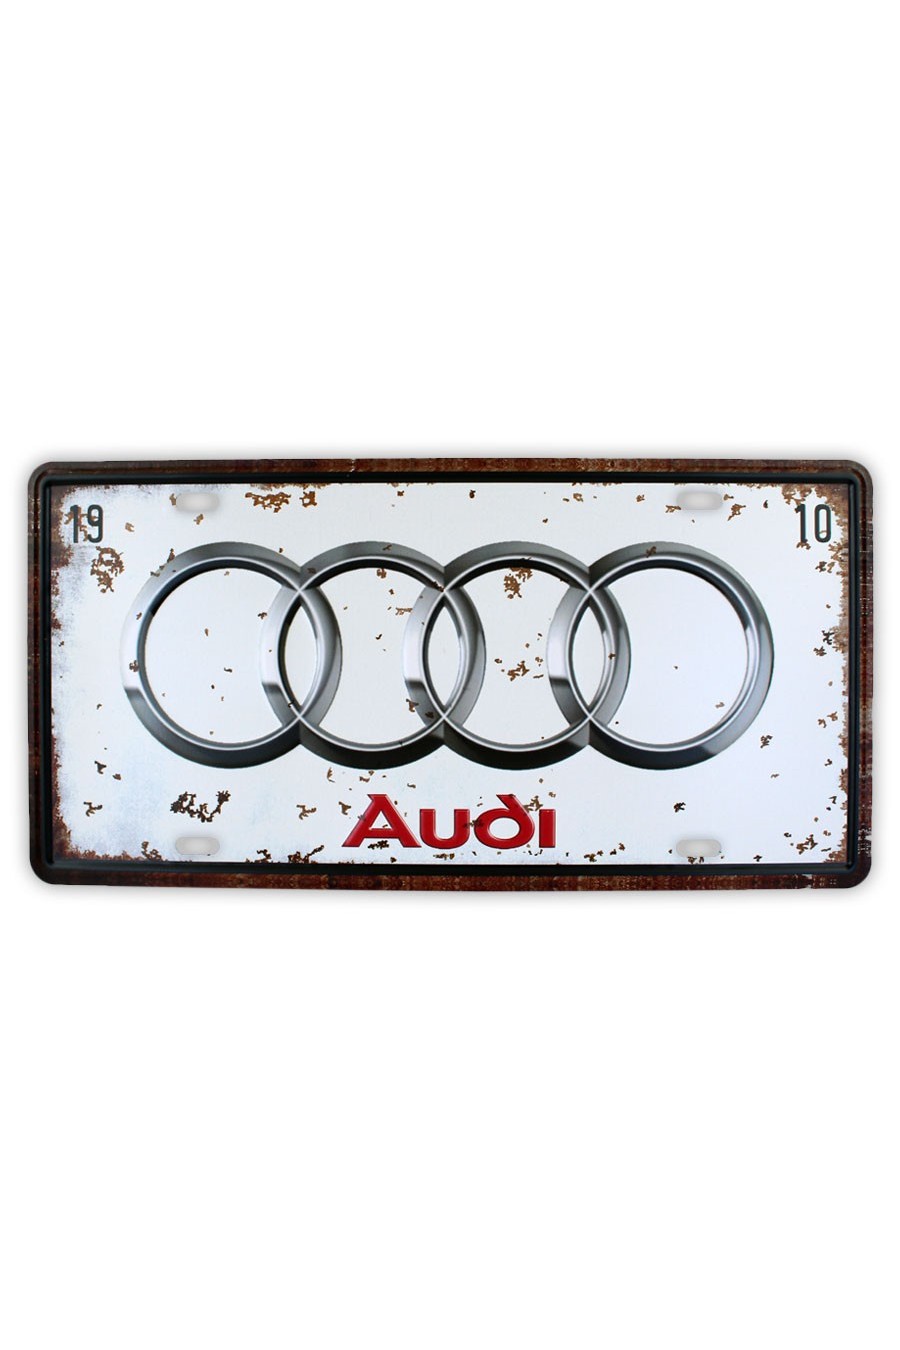 Audi Registration Plate